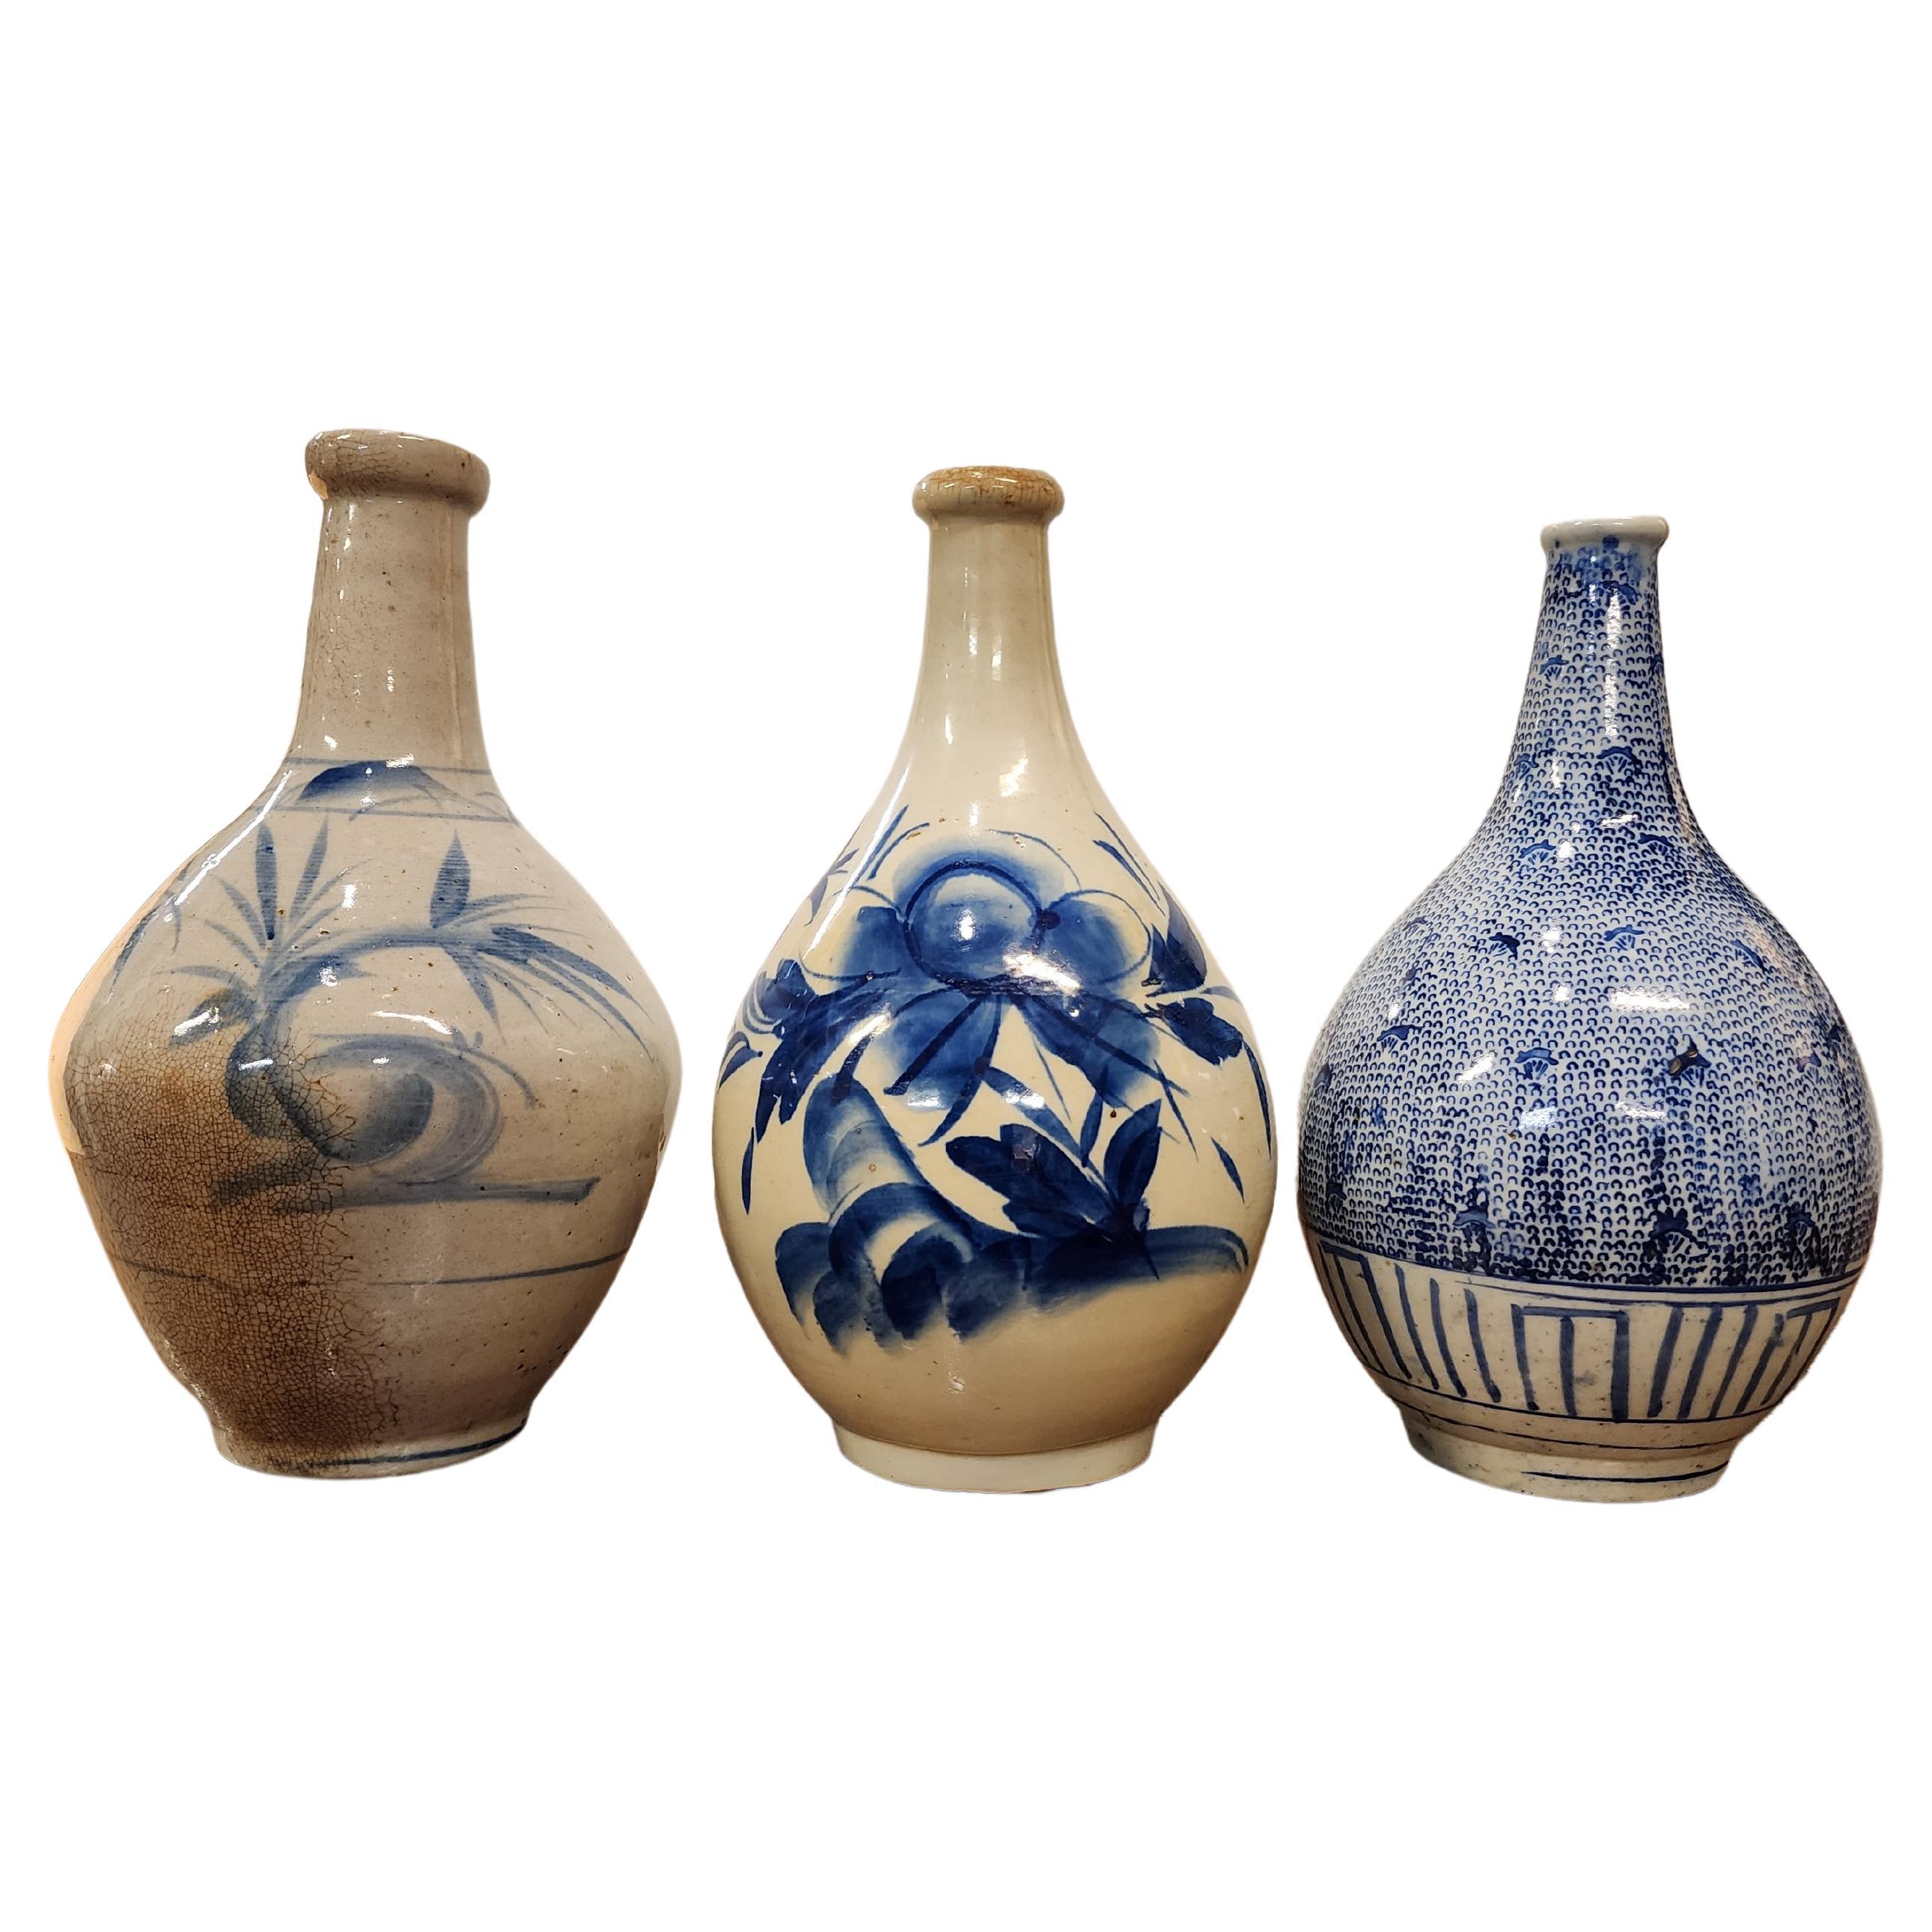 Folk Art 19th Century Sake Bottles, Collection of Three Japan 1850s